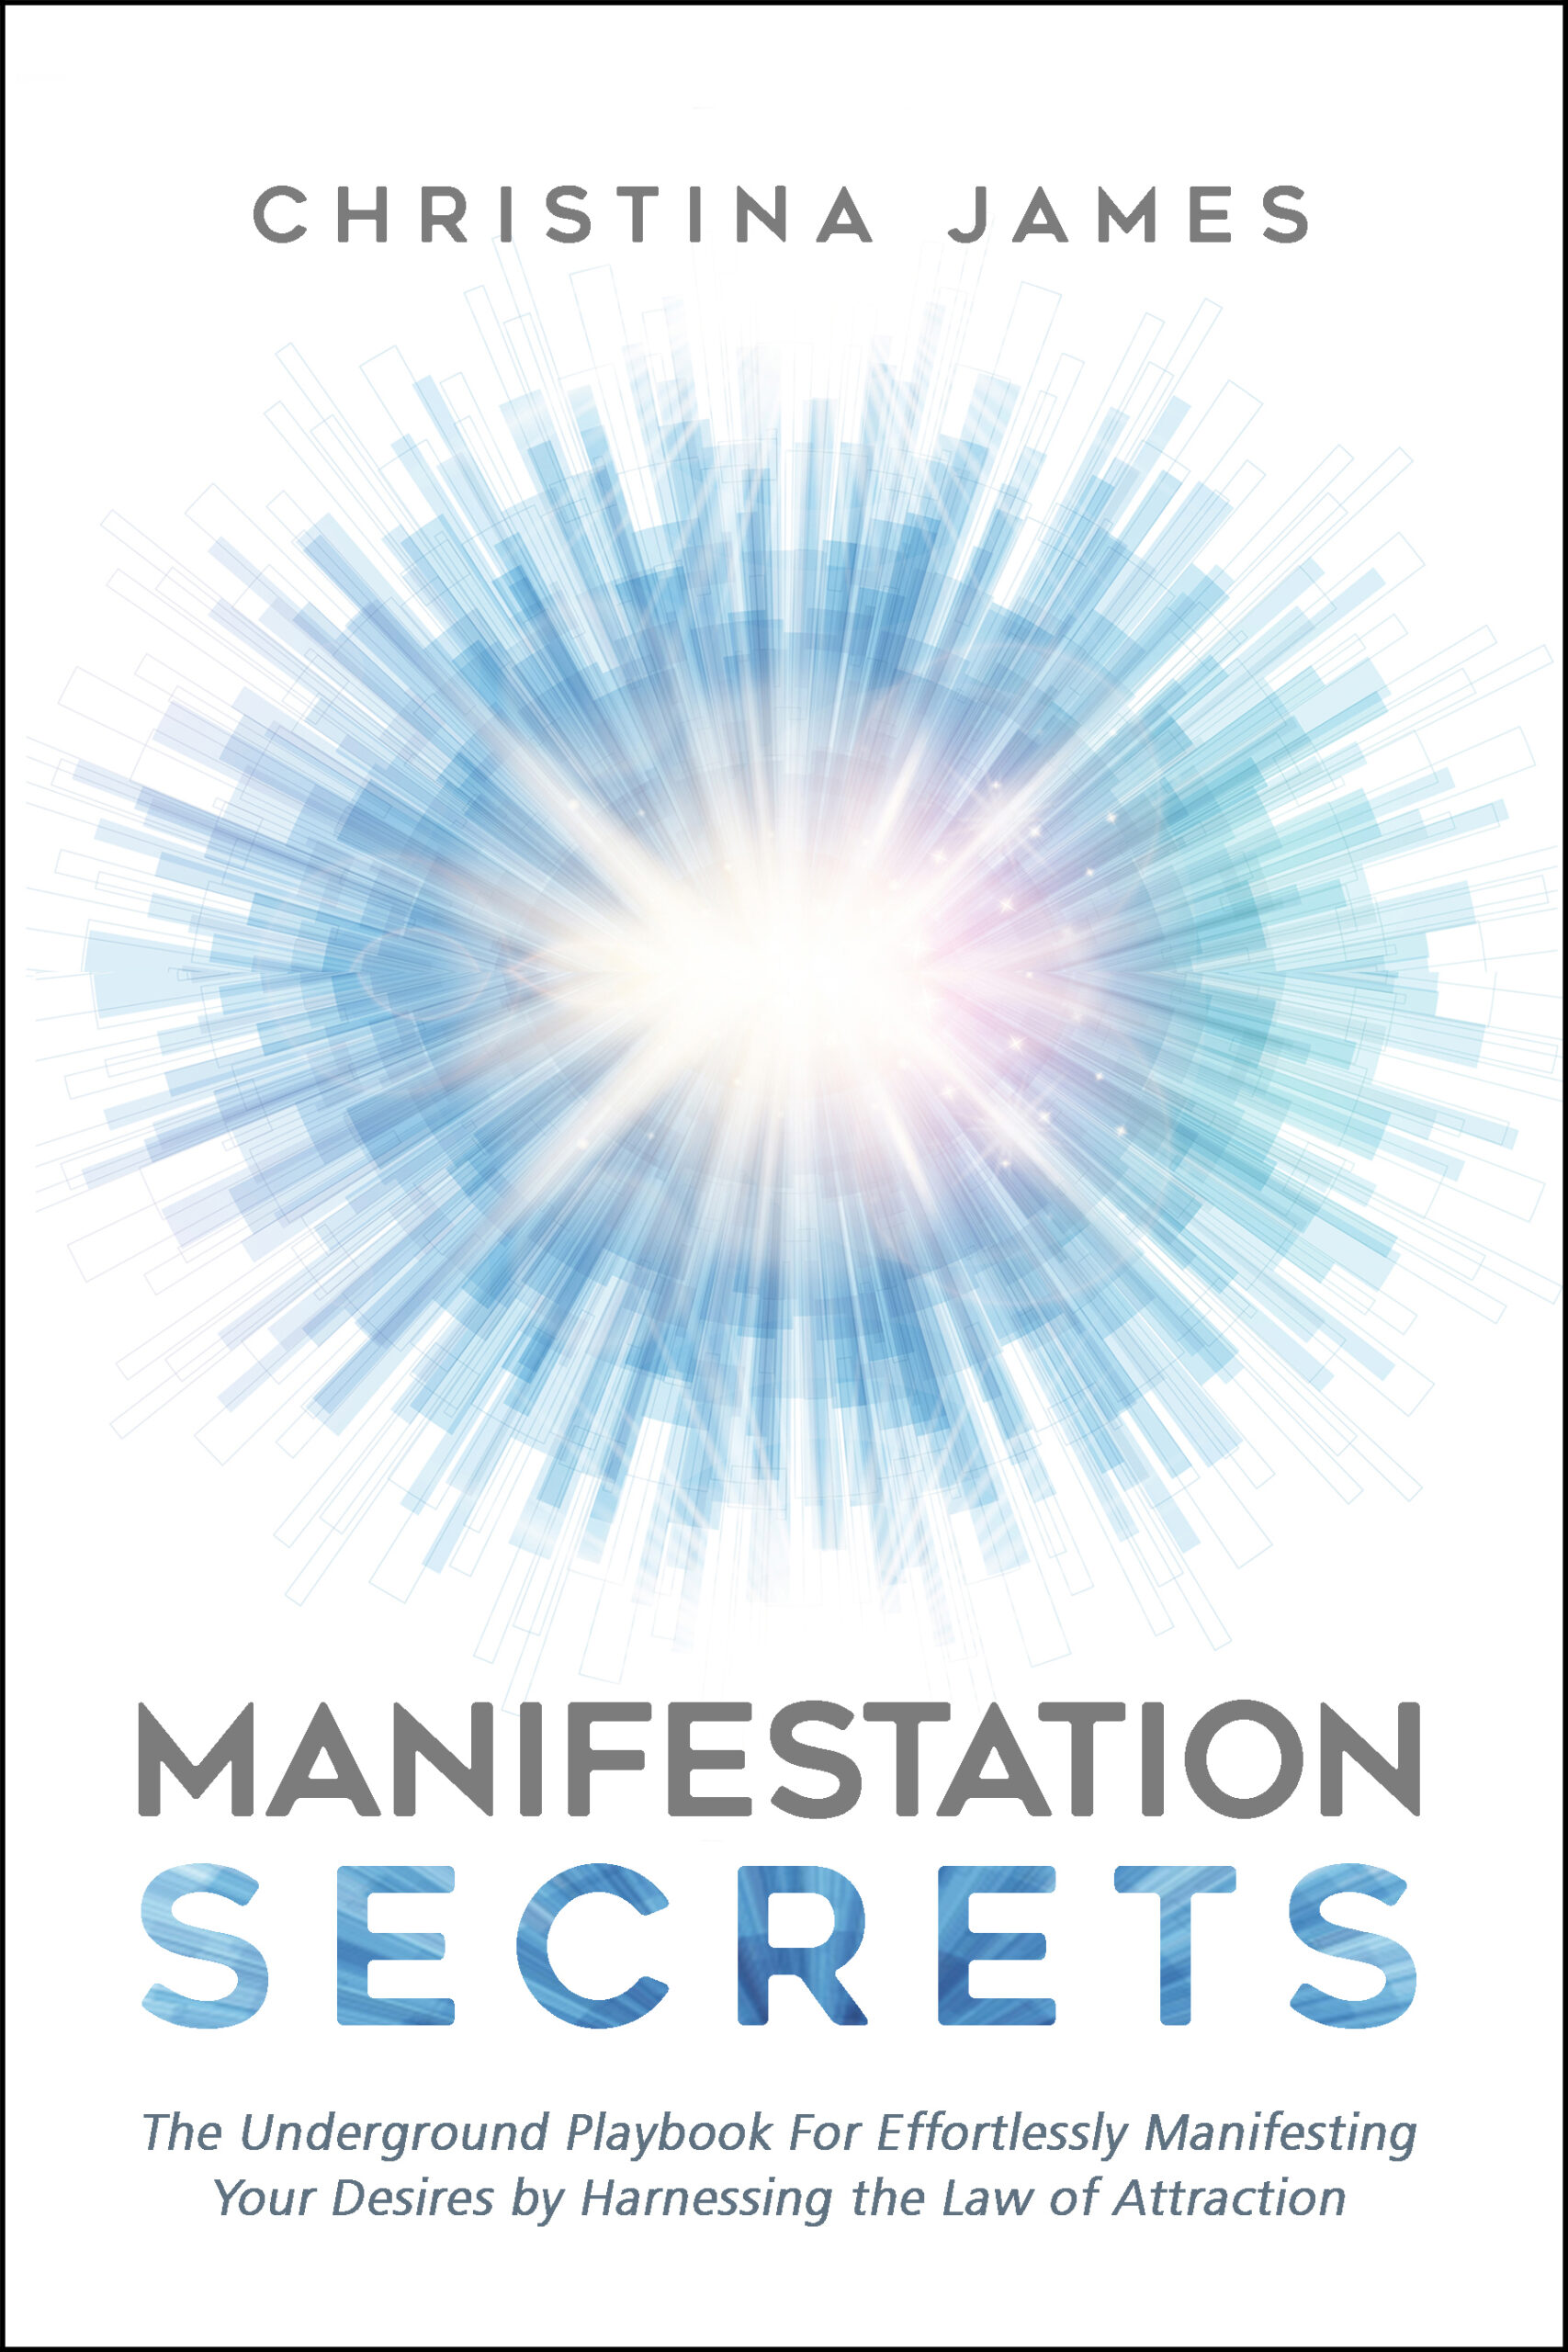 FREE: Manifestation Secrets by Christina James